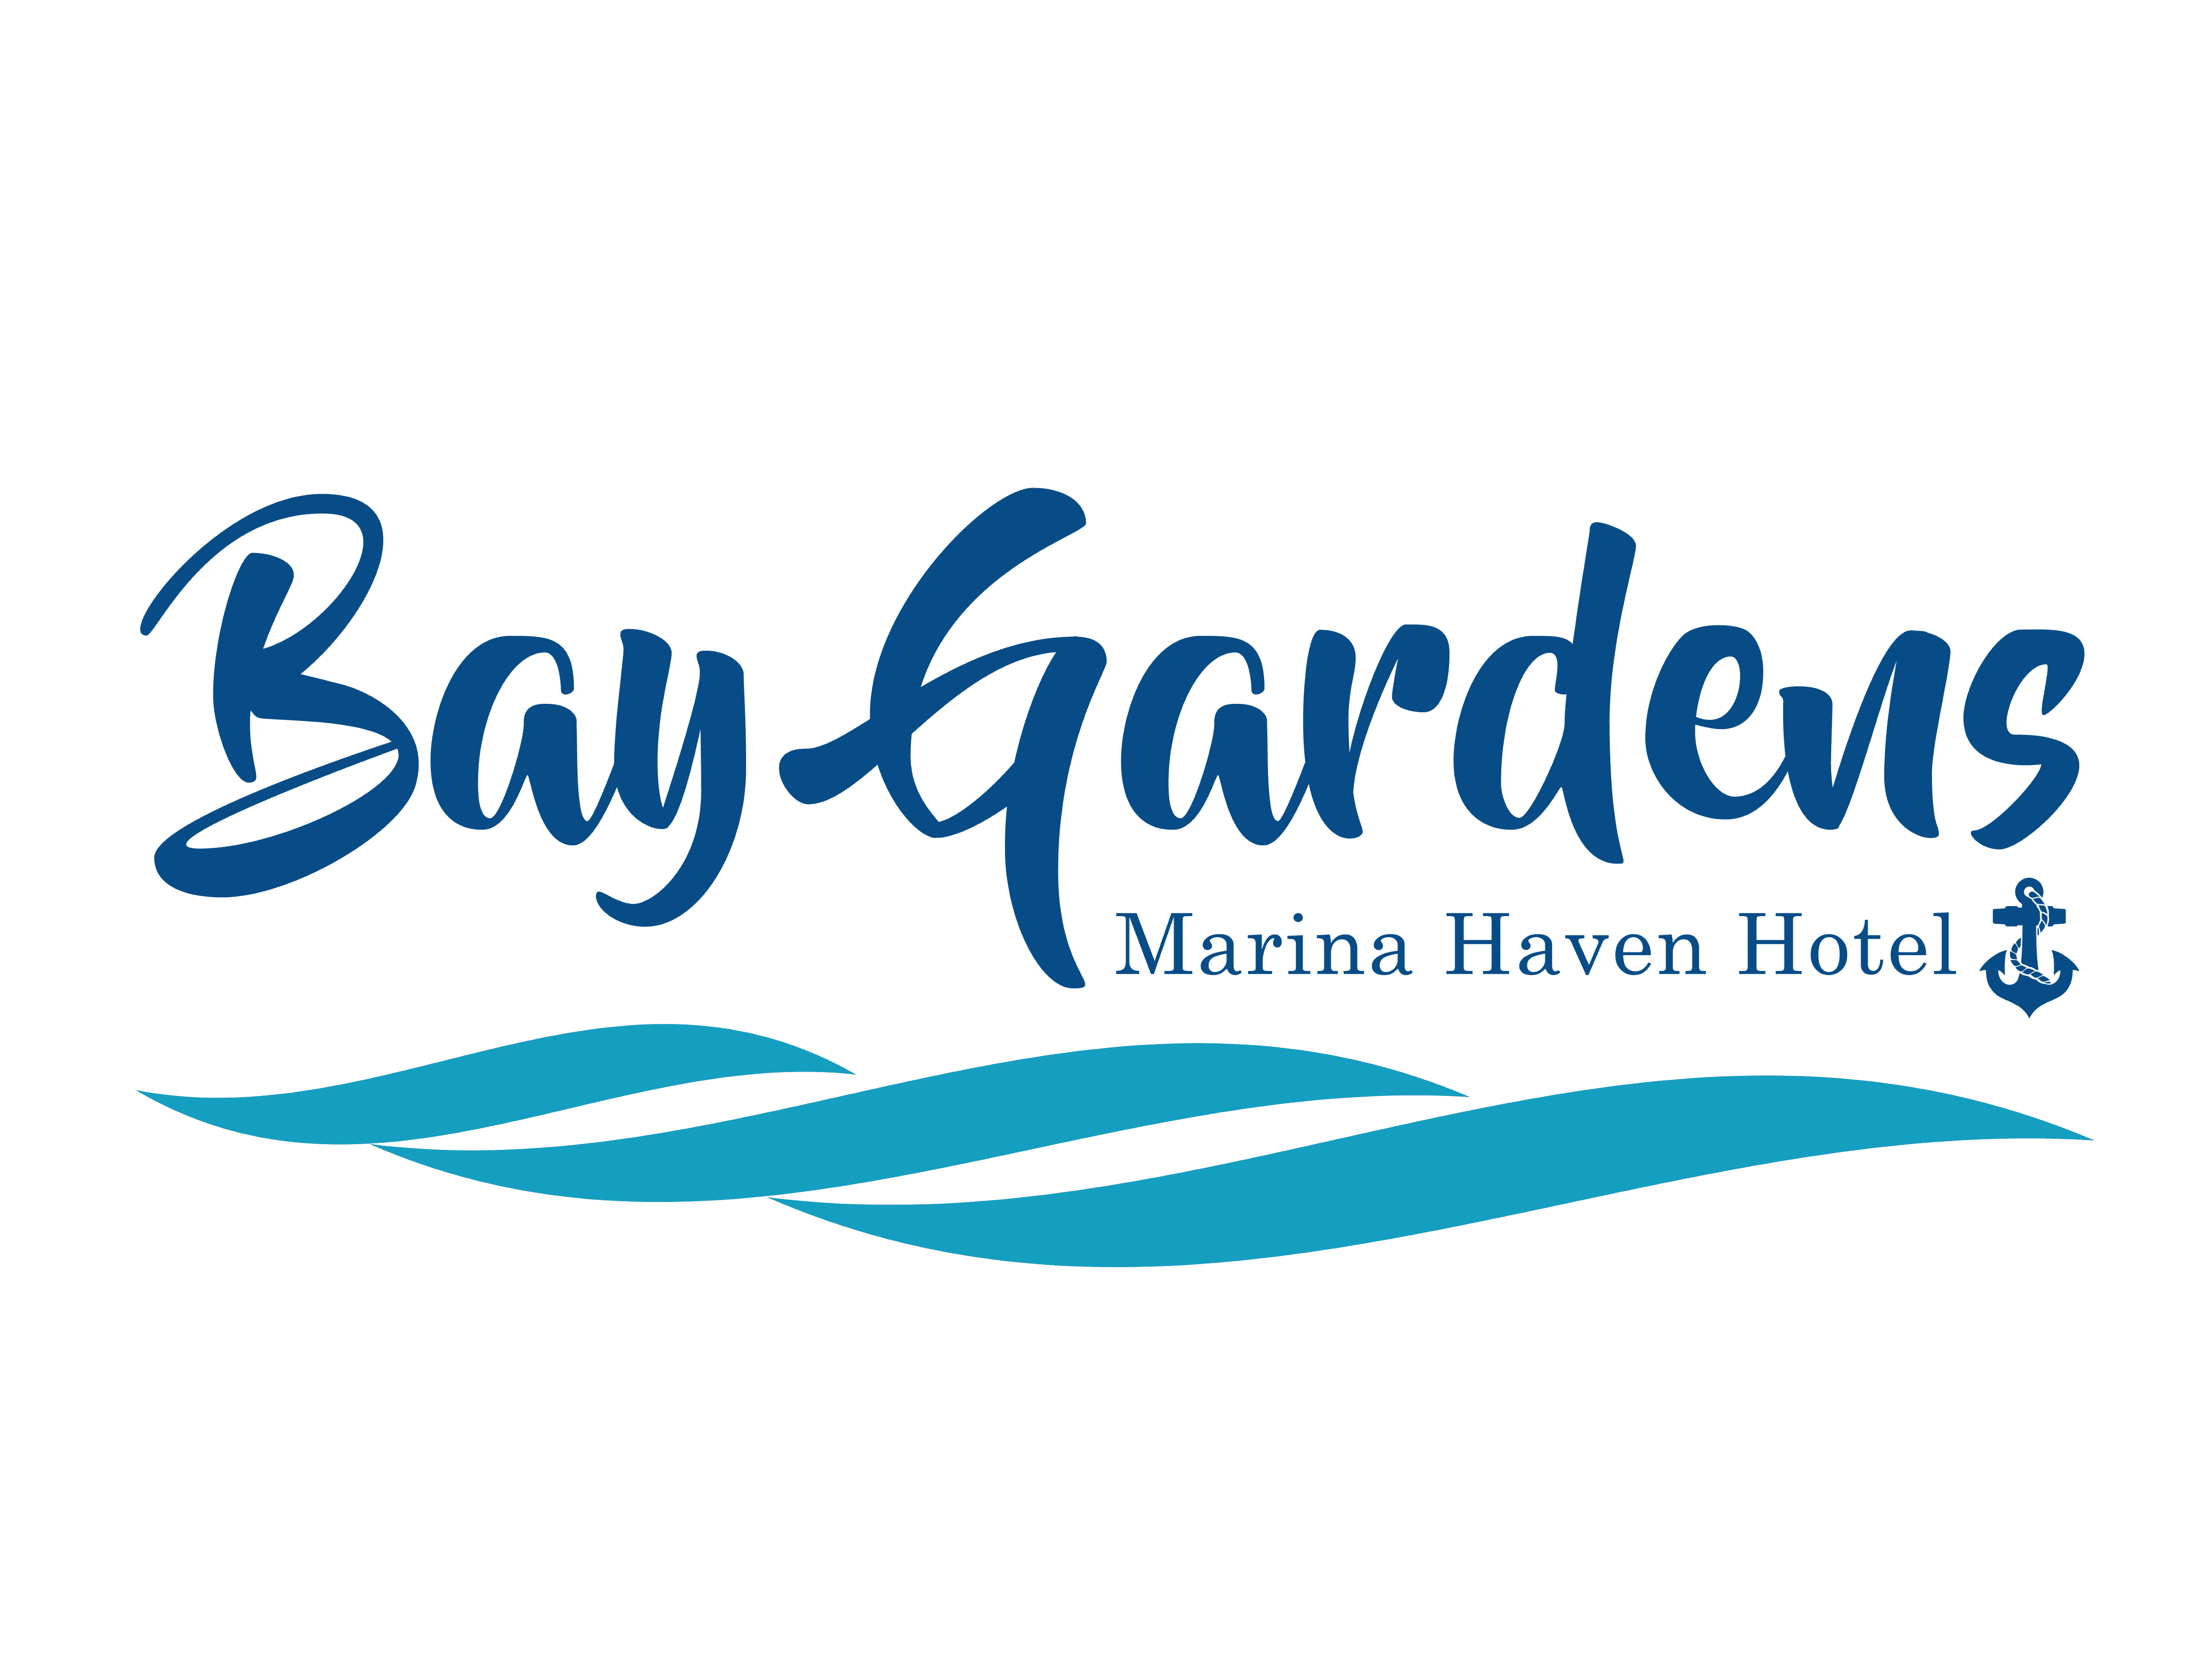 Bay Gardens Marina Haven